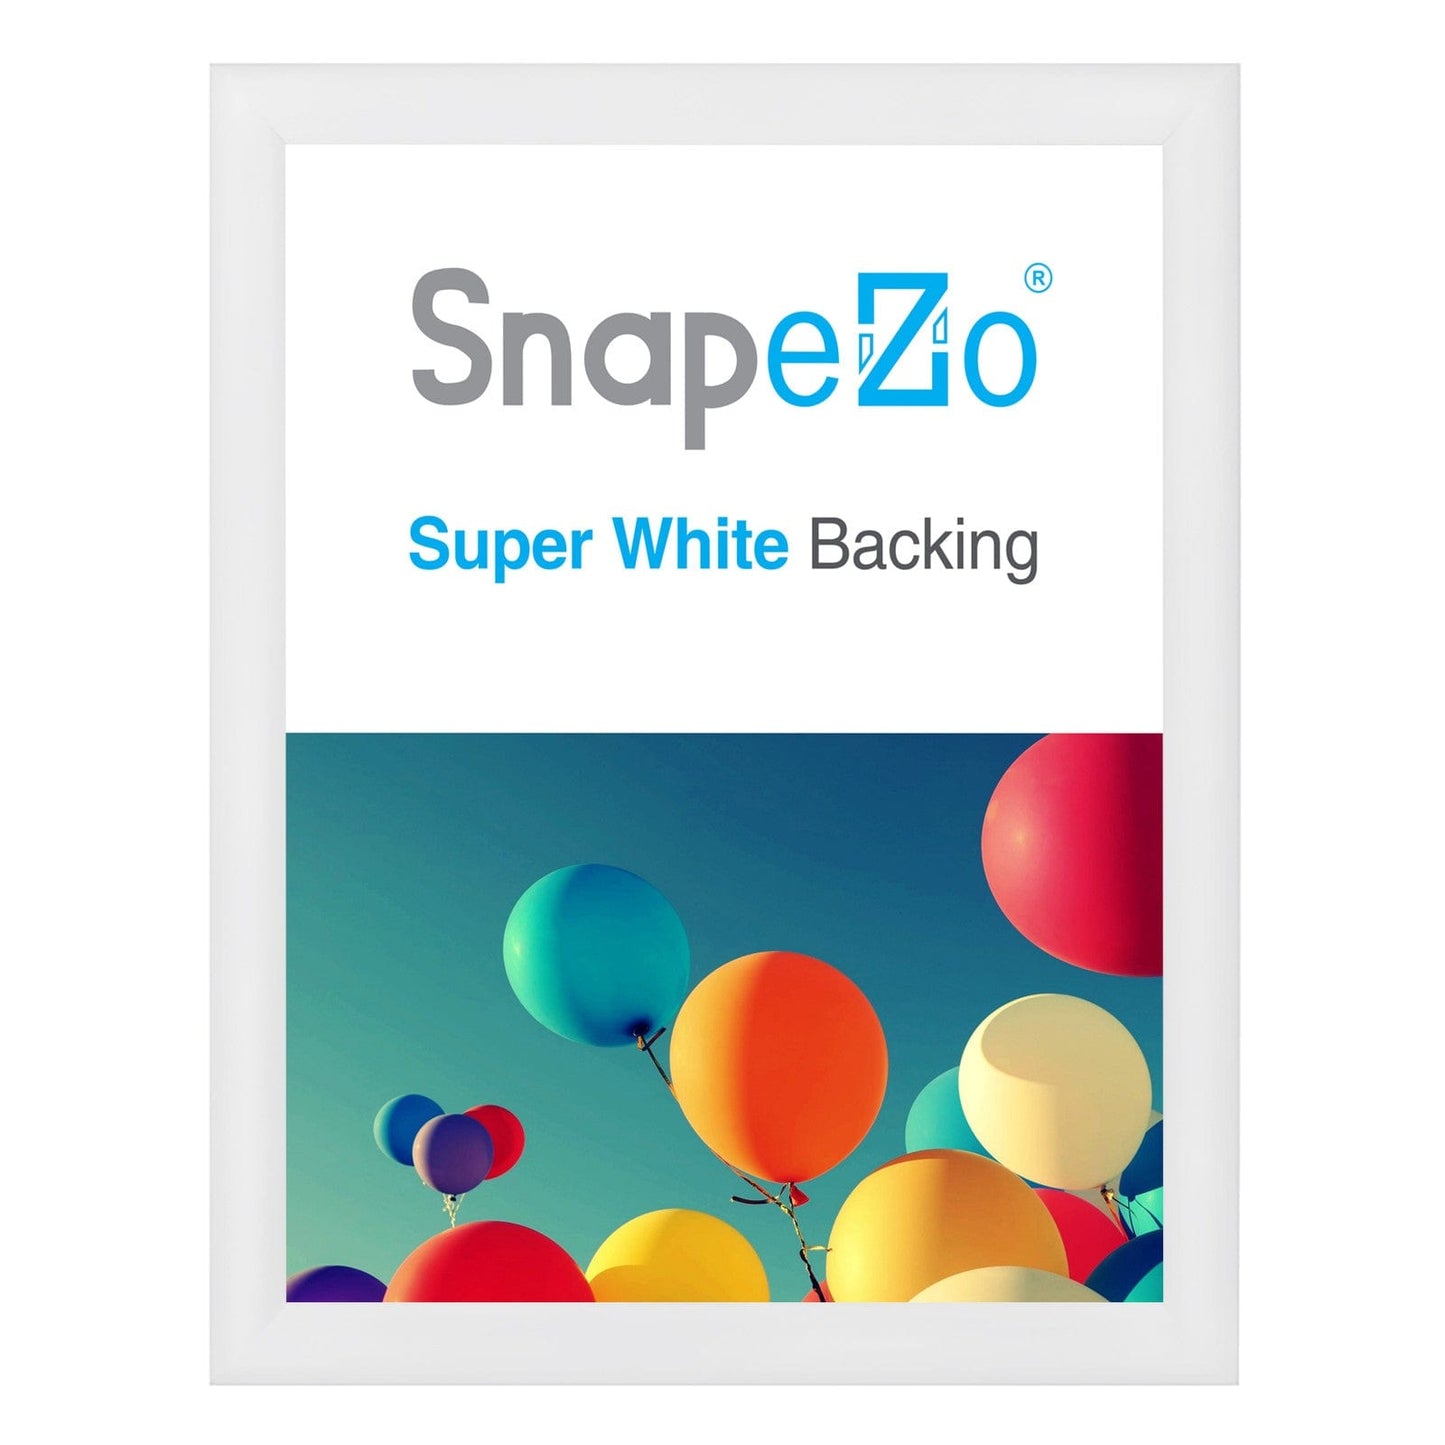 28x36 White SnapeZo® Snap Frame - 1.2" Profile - Snap Frames Direct